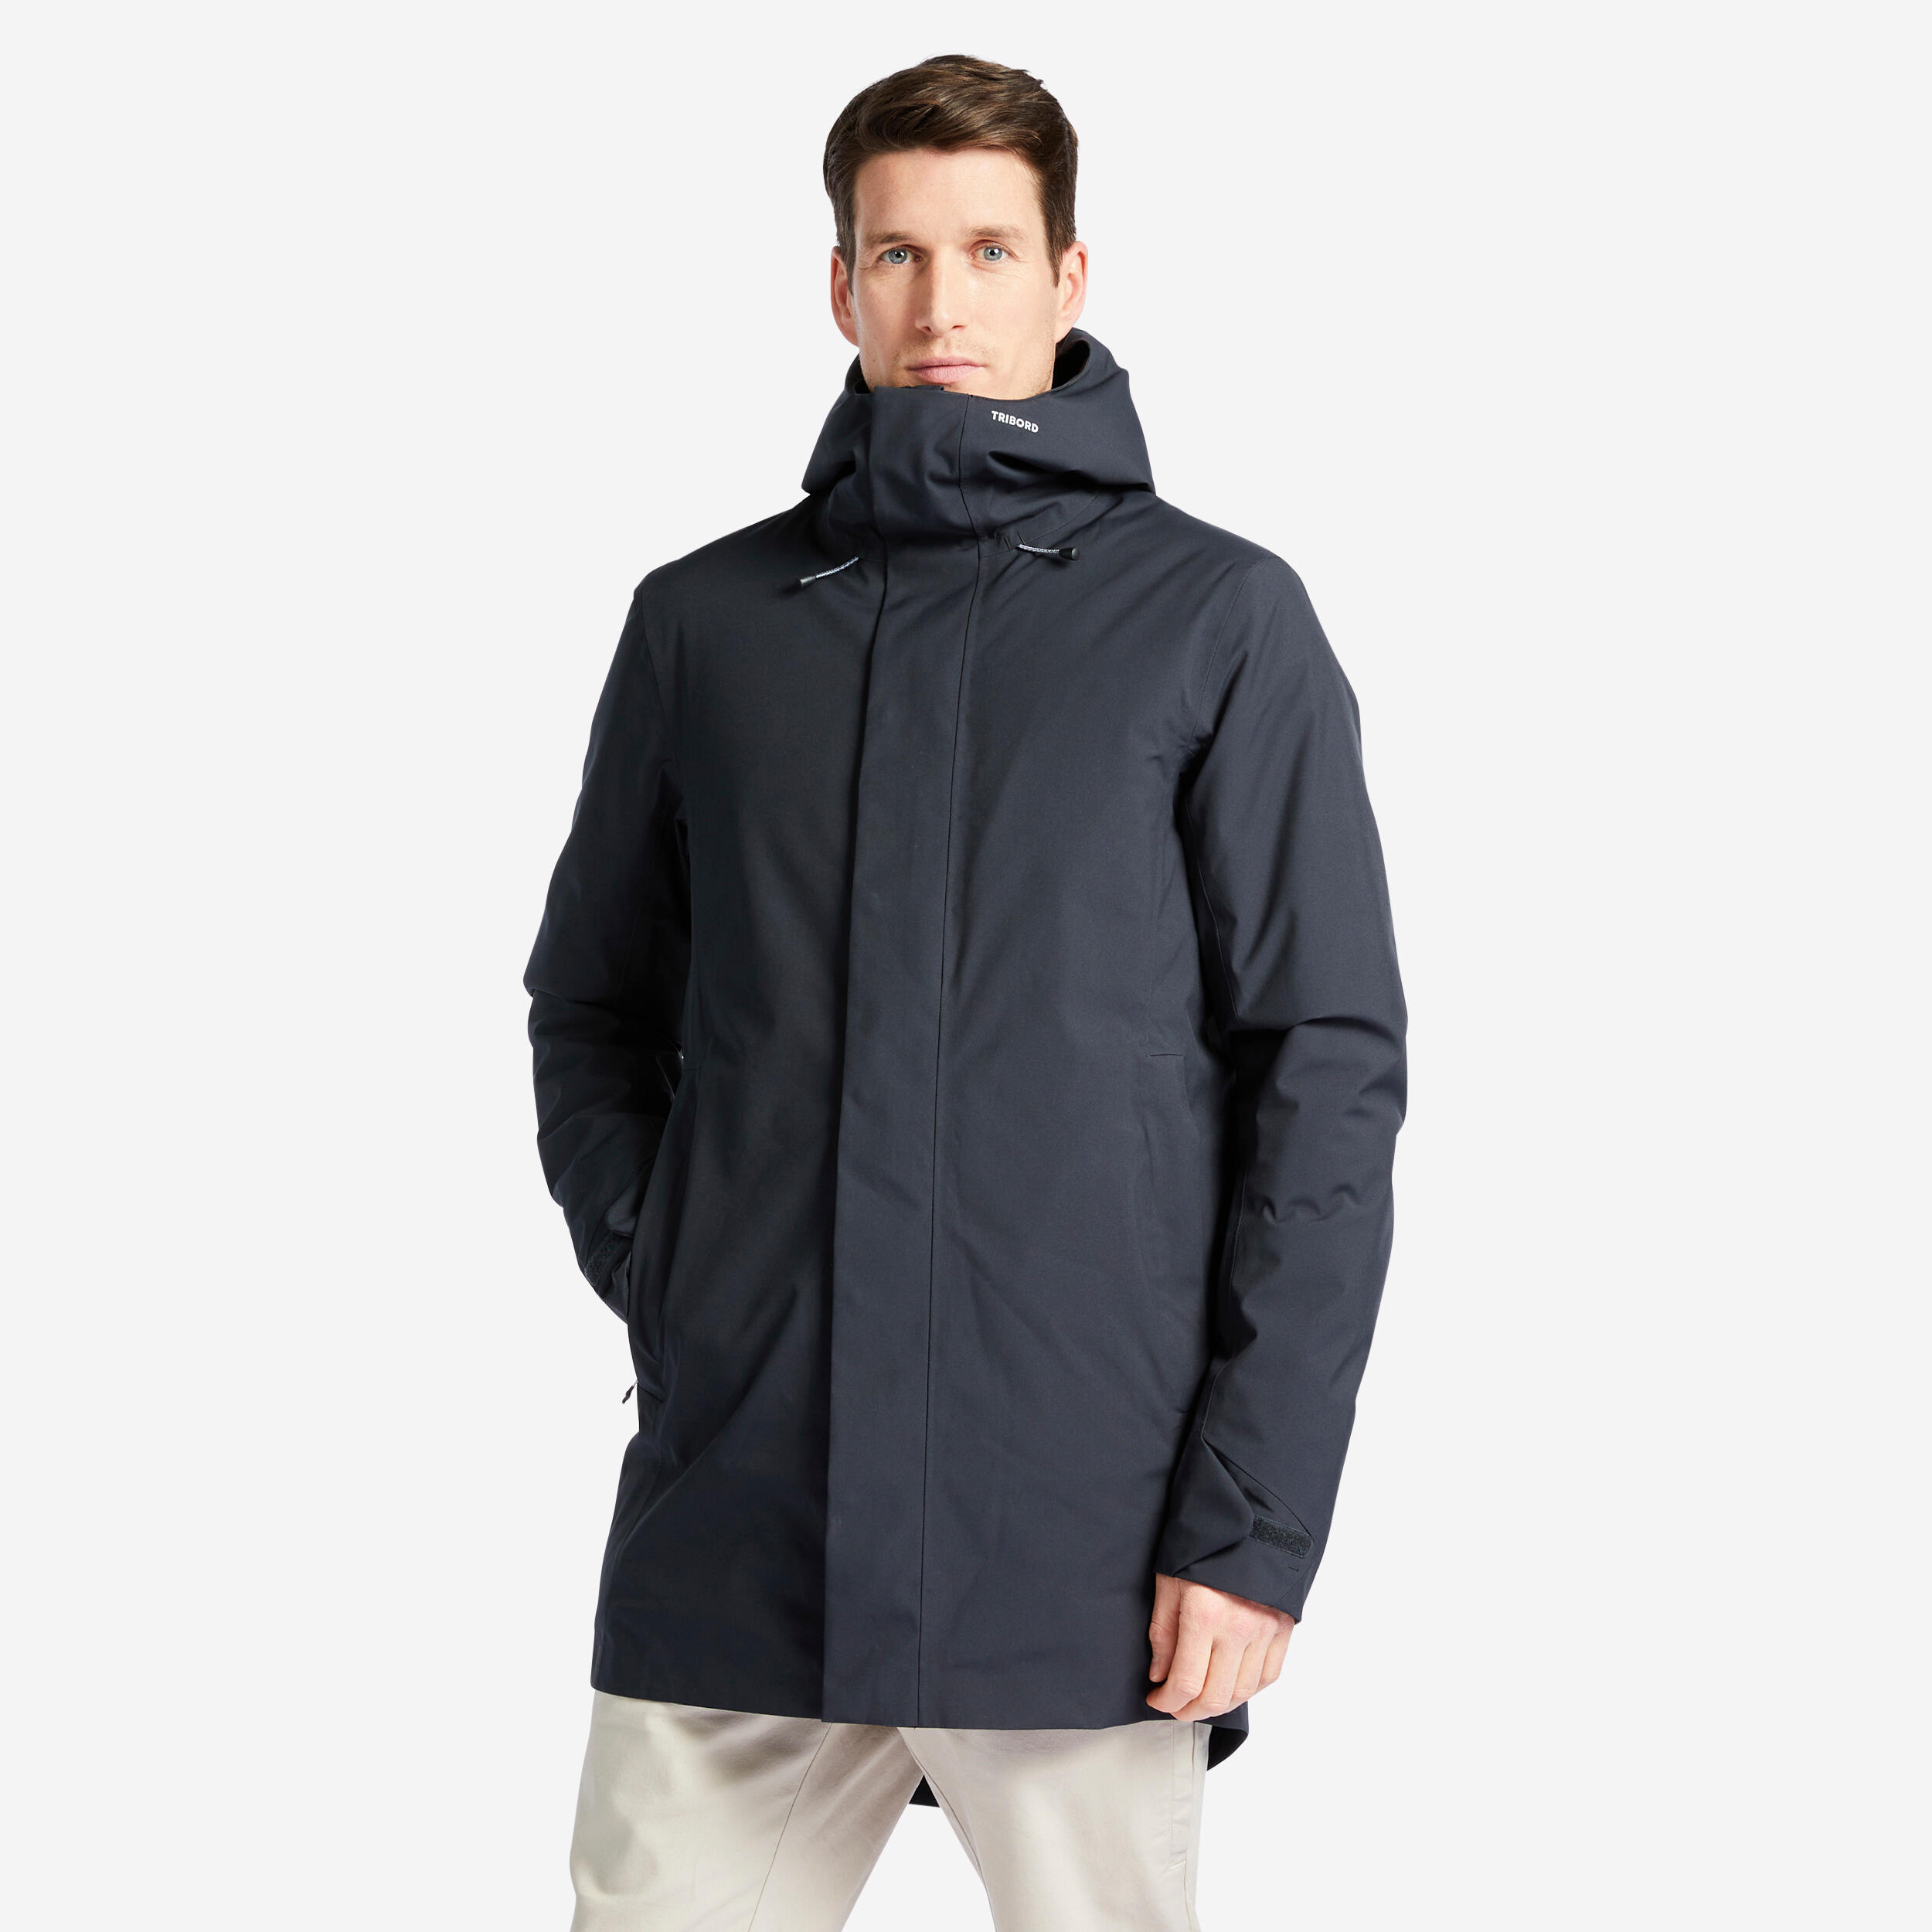 Men's warm waterproof windproof sailing jacket - SAILING 300 Dark grey 13/13